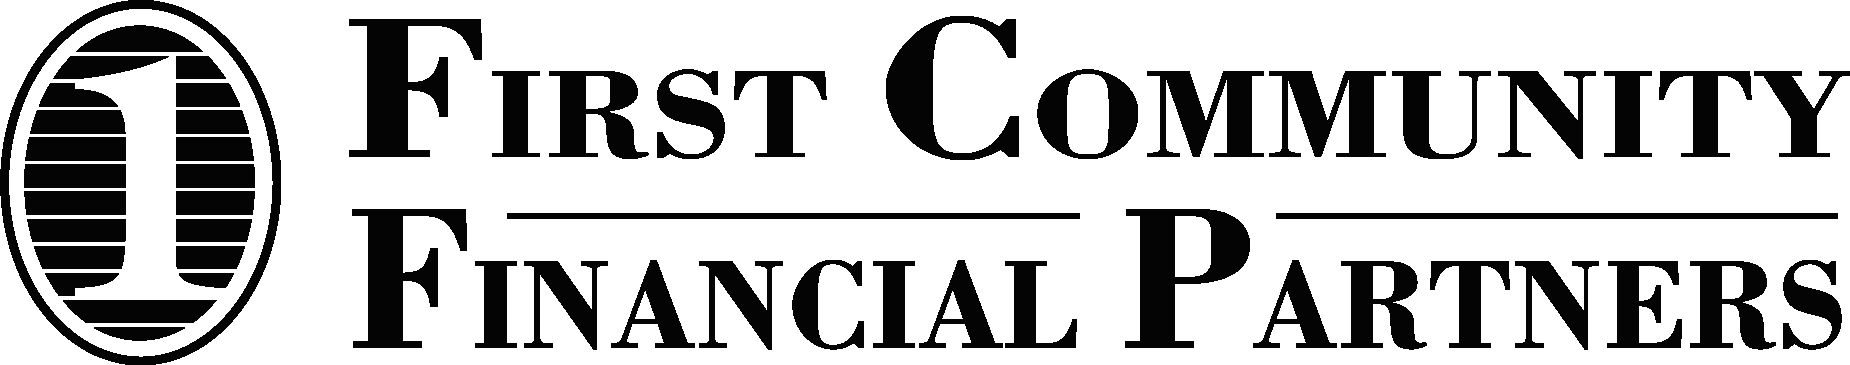 First Community Financial Partners black Logo Vector